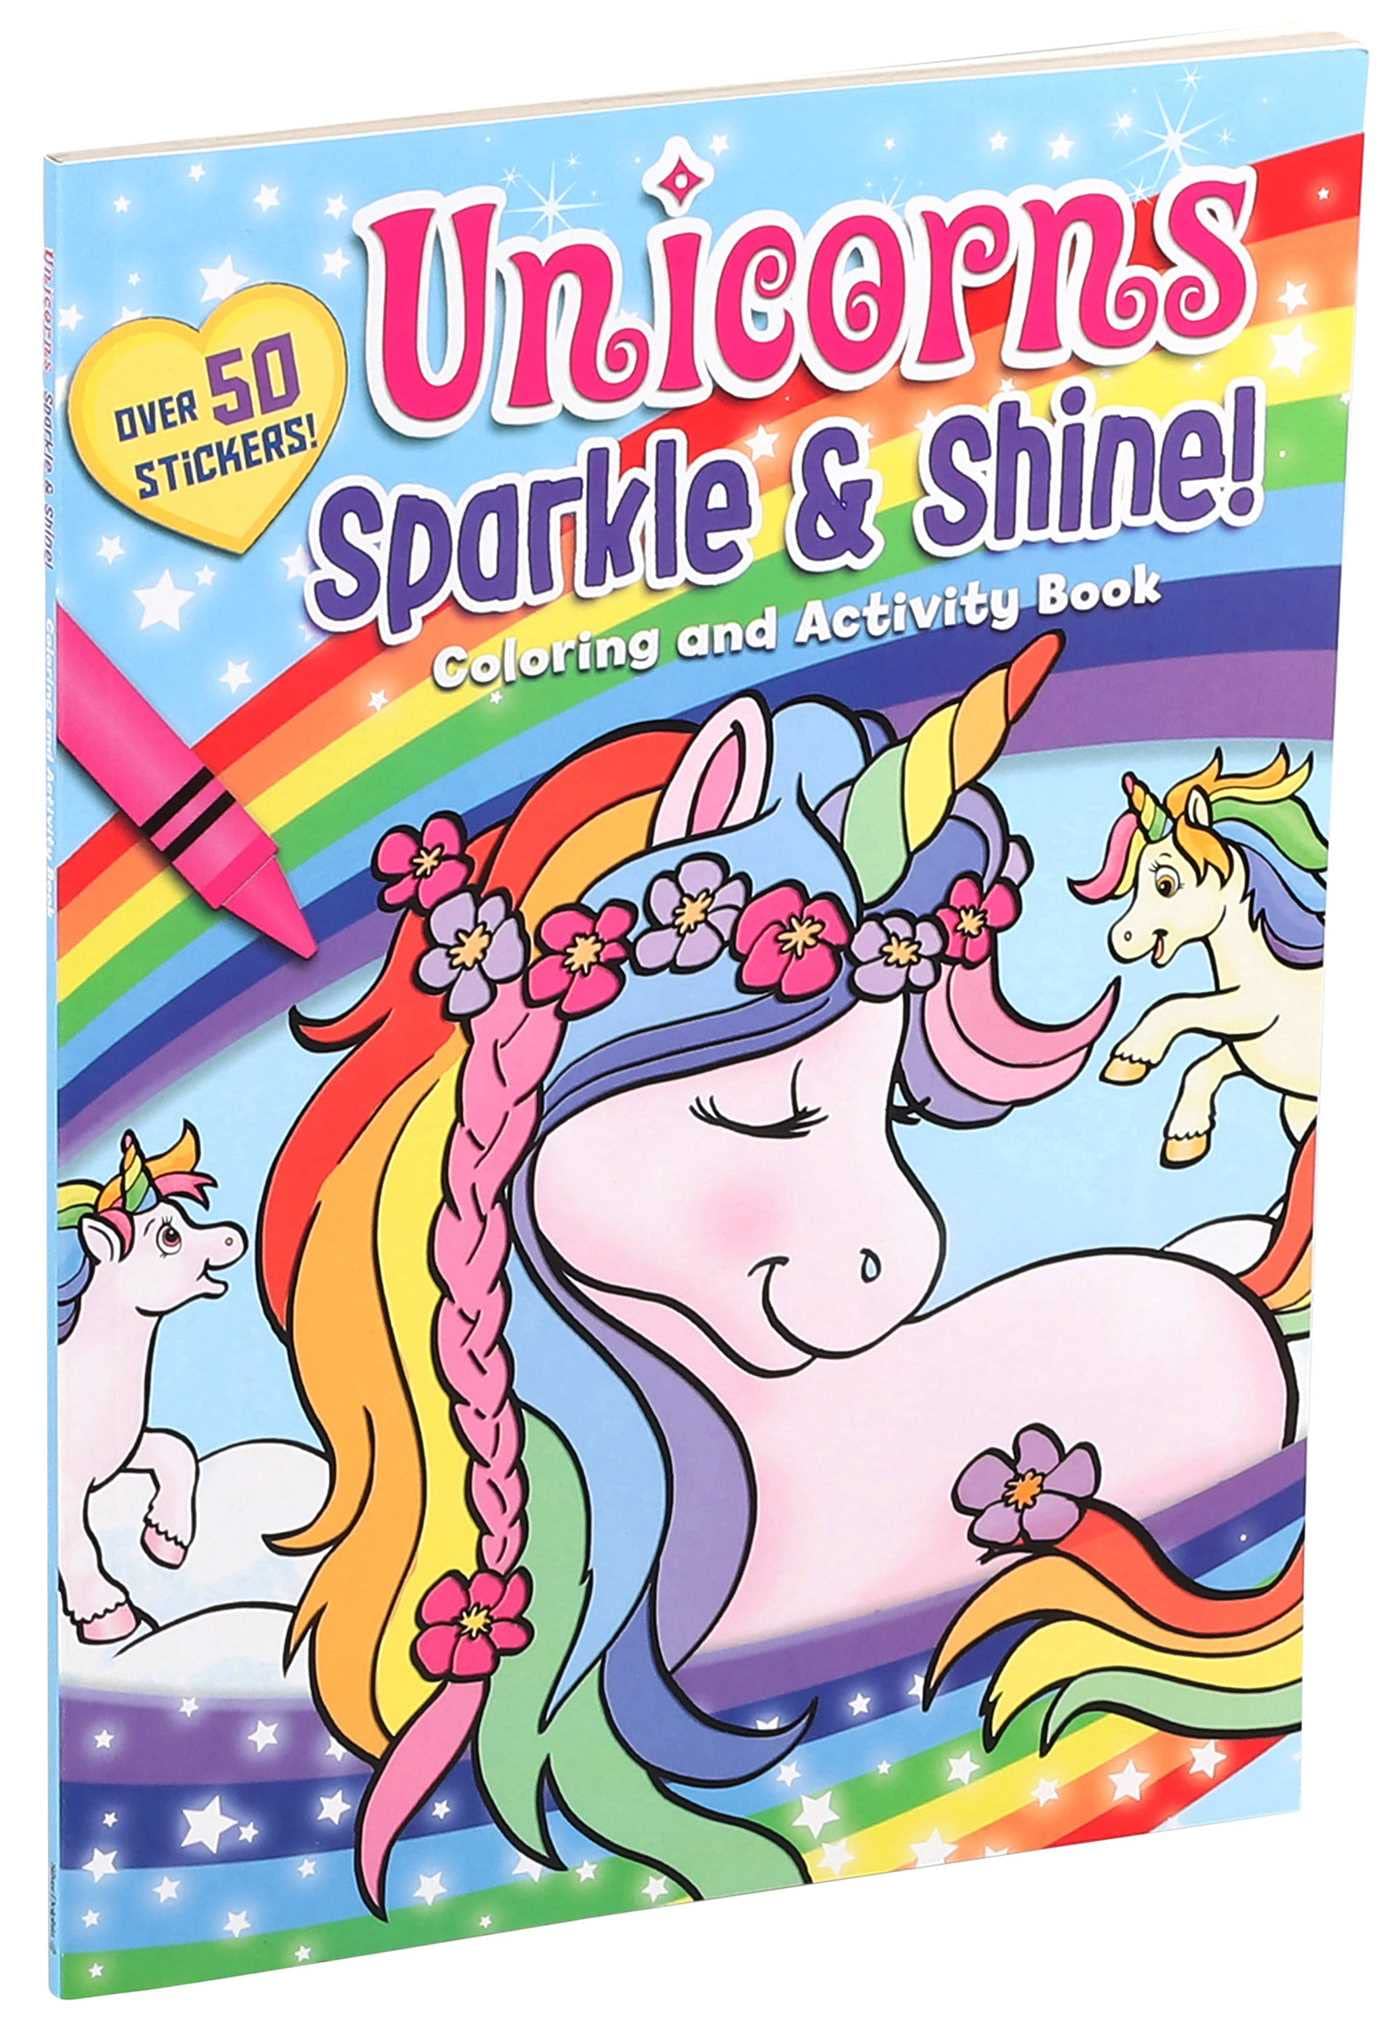 Unicorns Sparkle & Shine! Coloring and Activity Book (Coloring Fun)